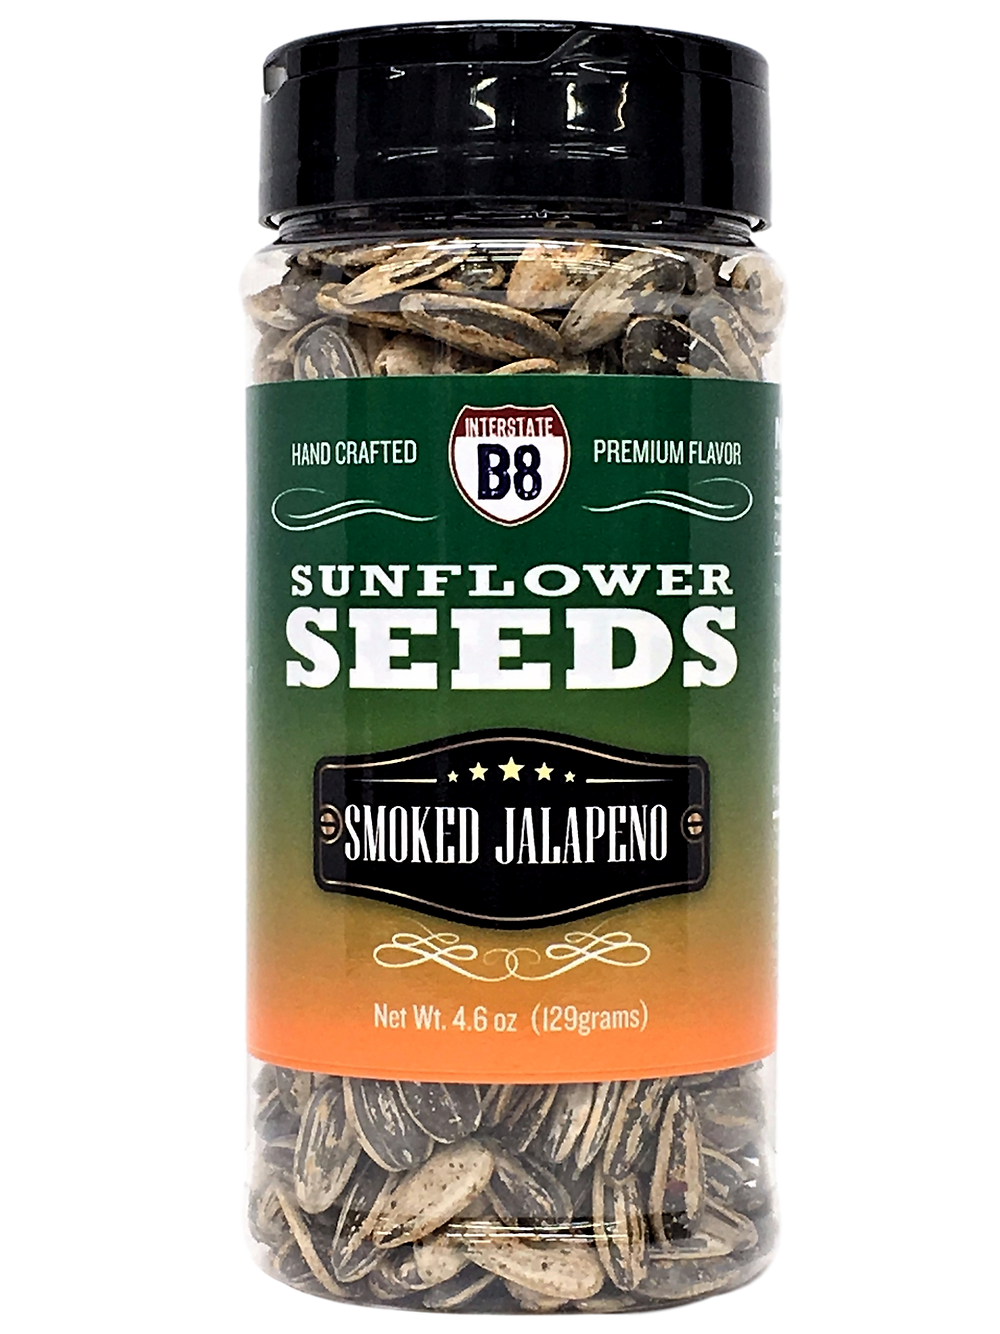 Interstate B8 Smoked Jalapeno Sunflower Seeds